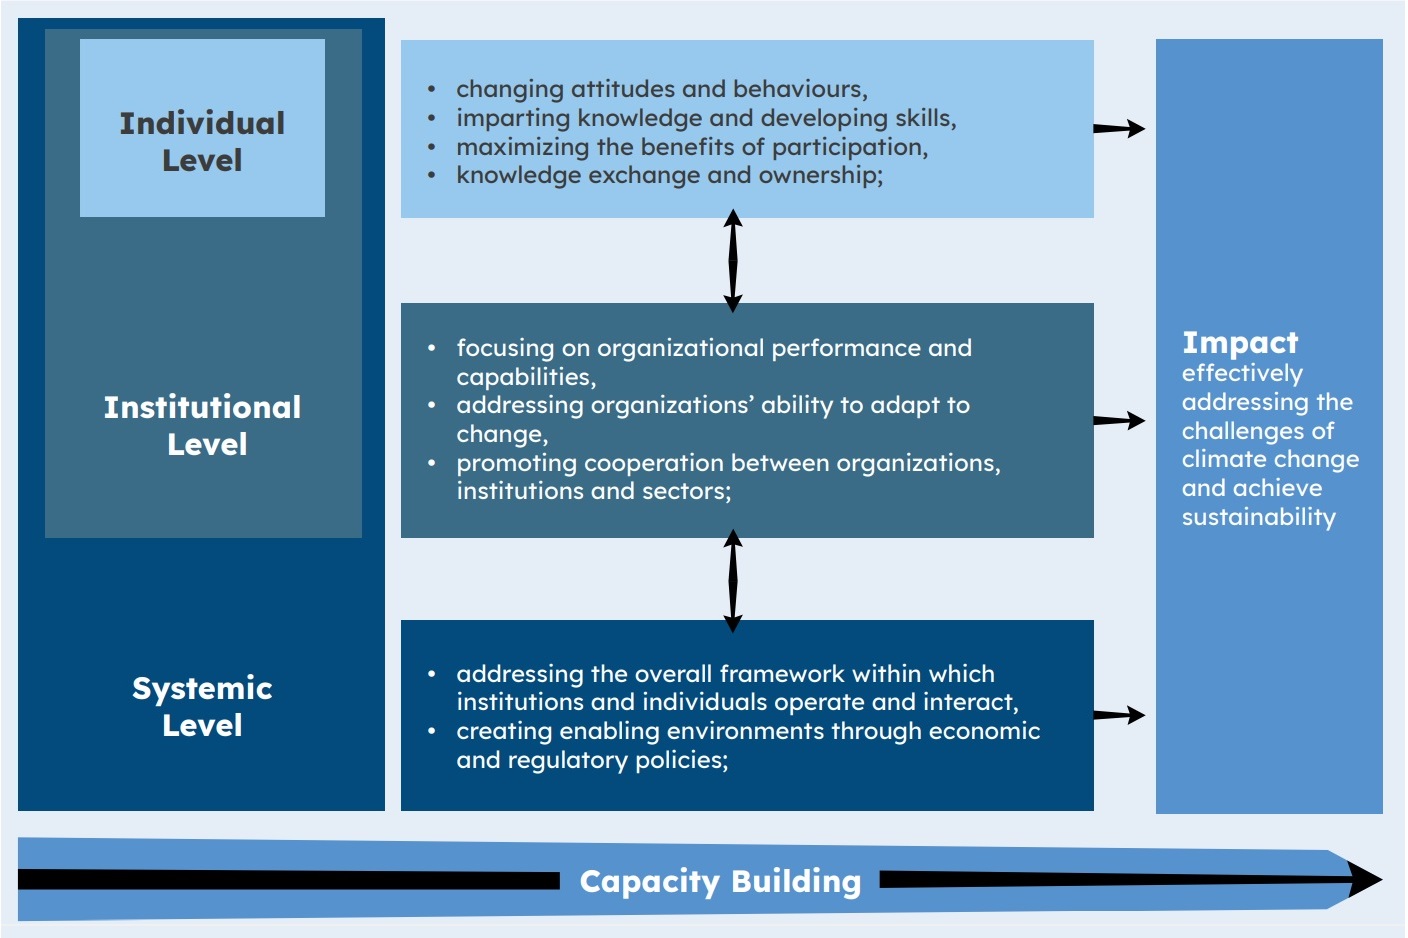 Capacity-building levels